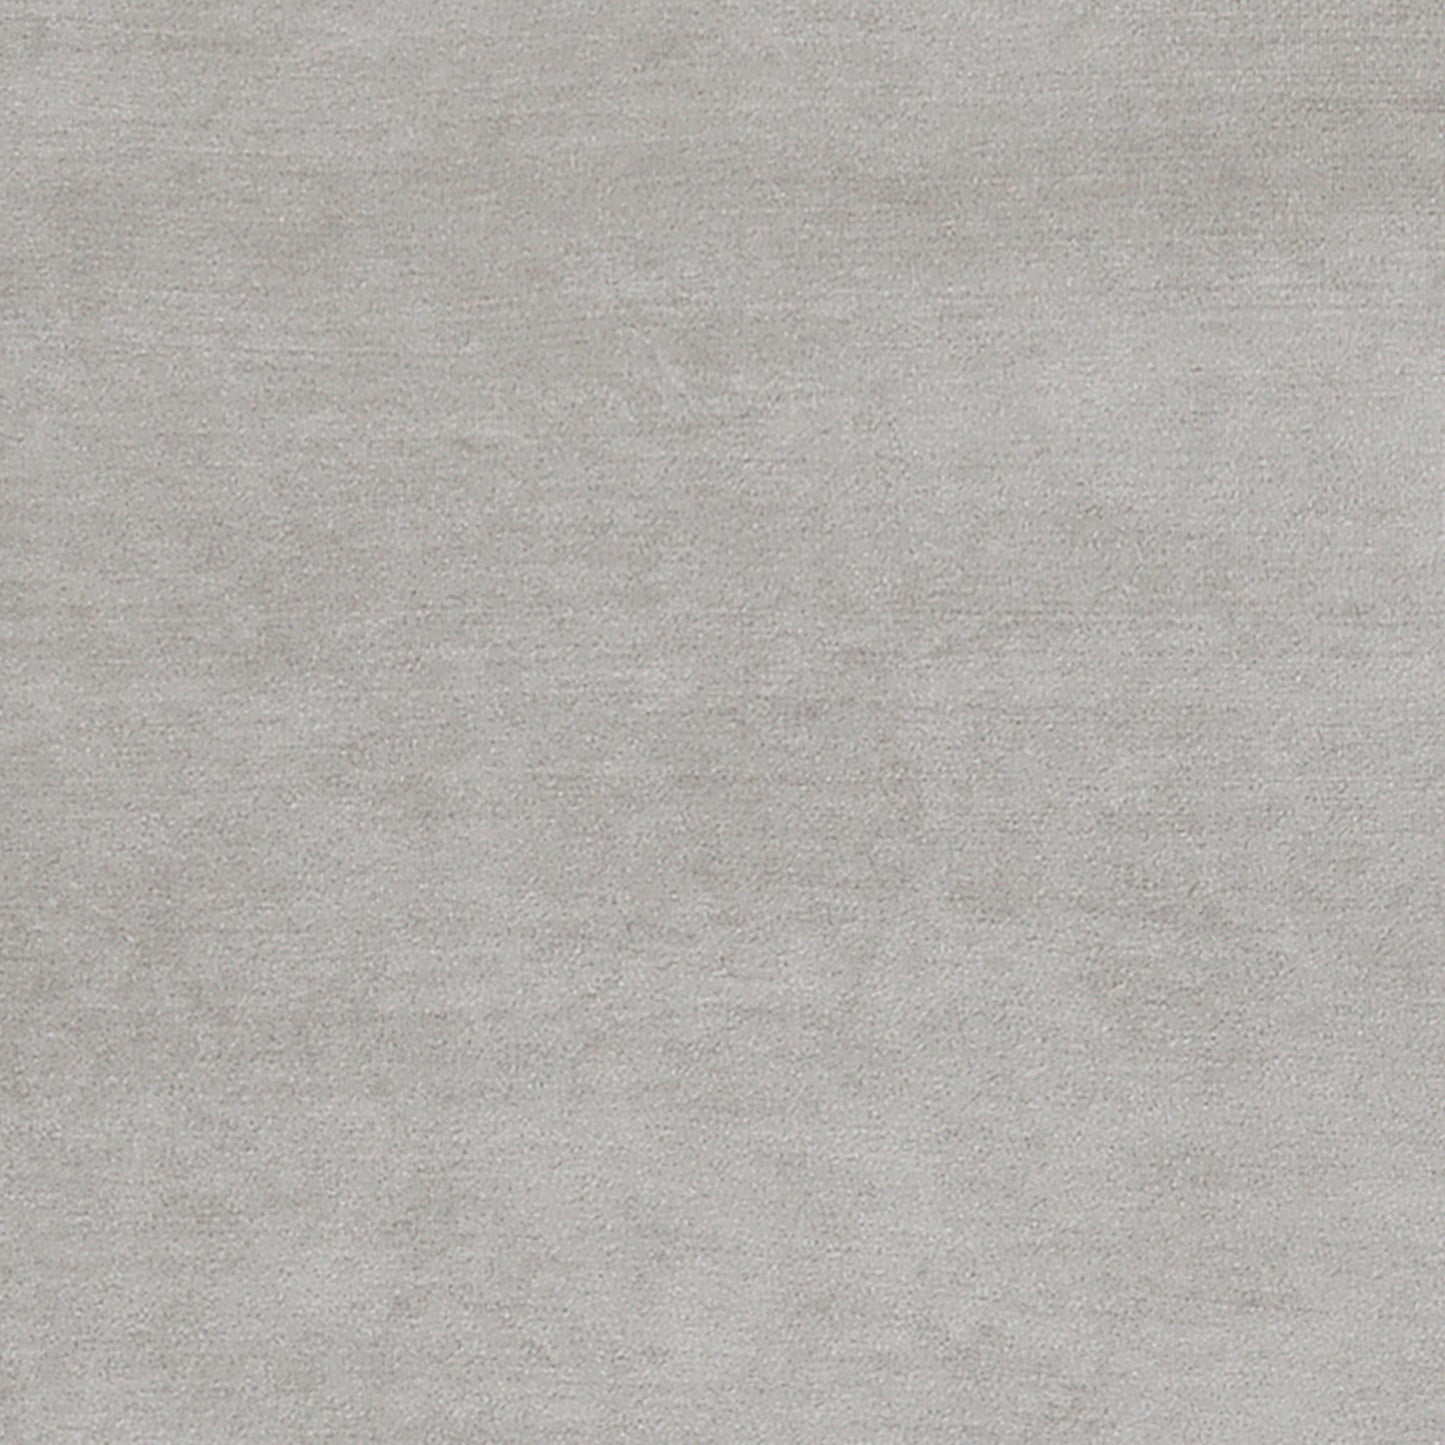 Avonlea Sloped Arm Tufted Sofa Grey